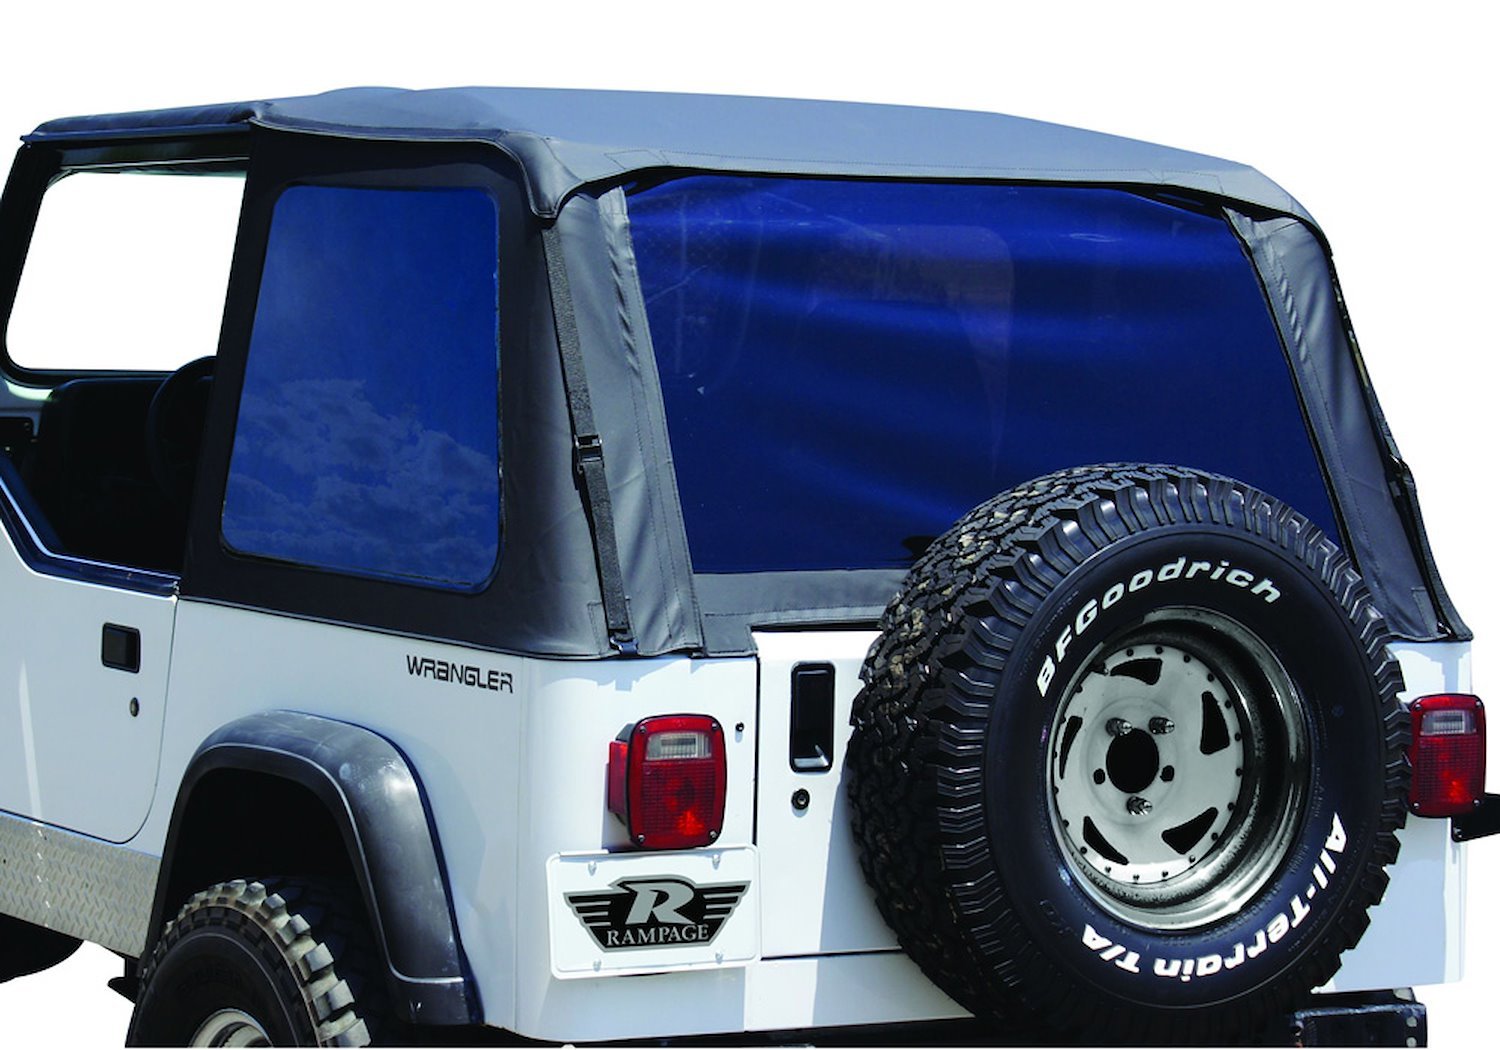 109435 Trail Top Frameless Soft Top Kit for 1992-1995 Jeep Wrangler YJ [Black Diamond]